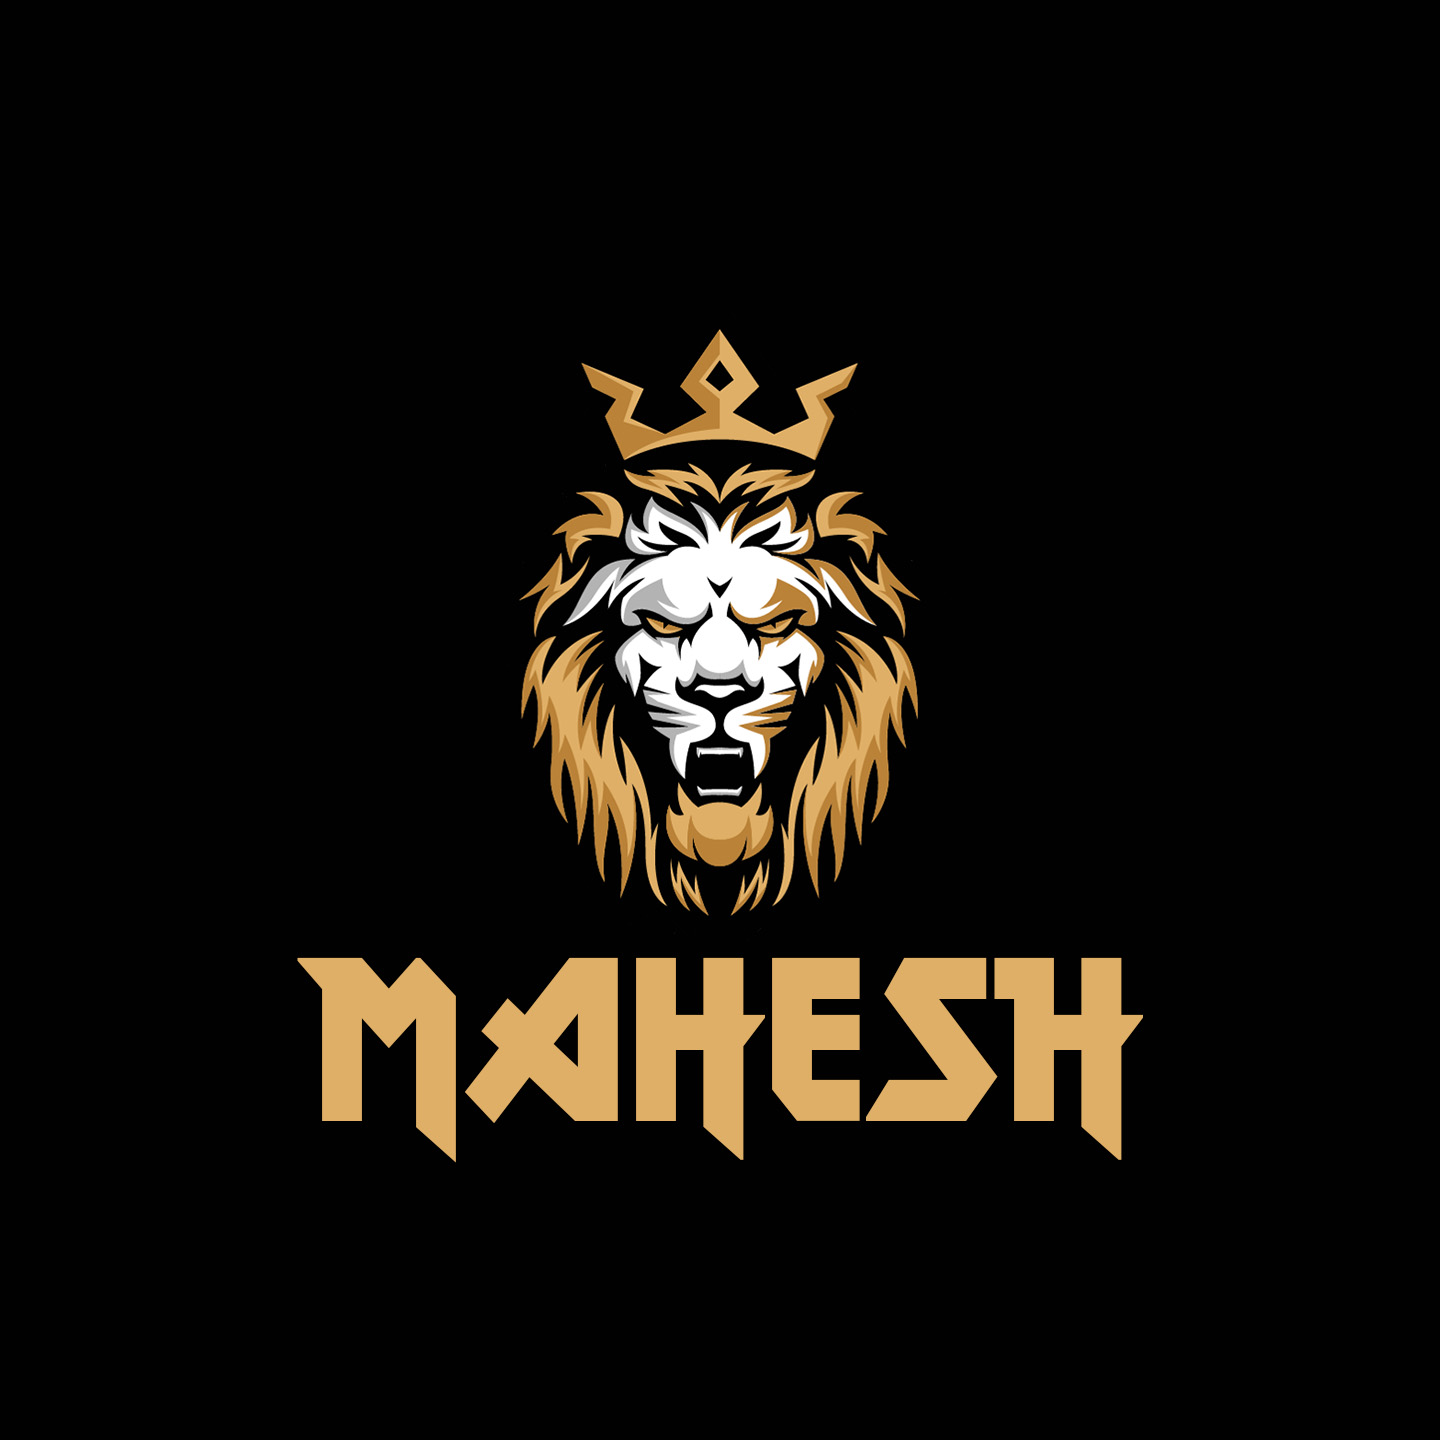 Mahesh name tattoo 25+ designs | महेश नाम टैटू डिज़ाइन | #mahesh - YouTube